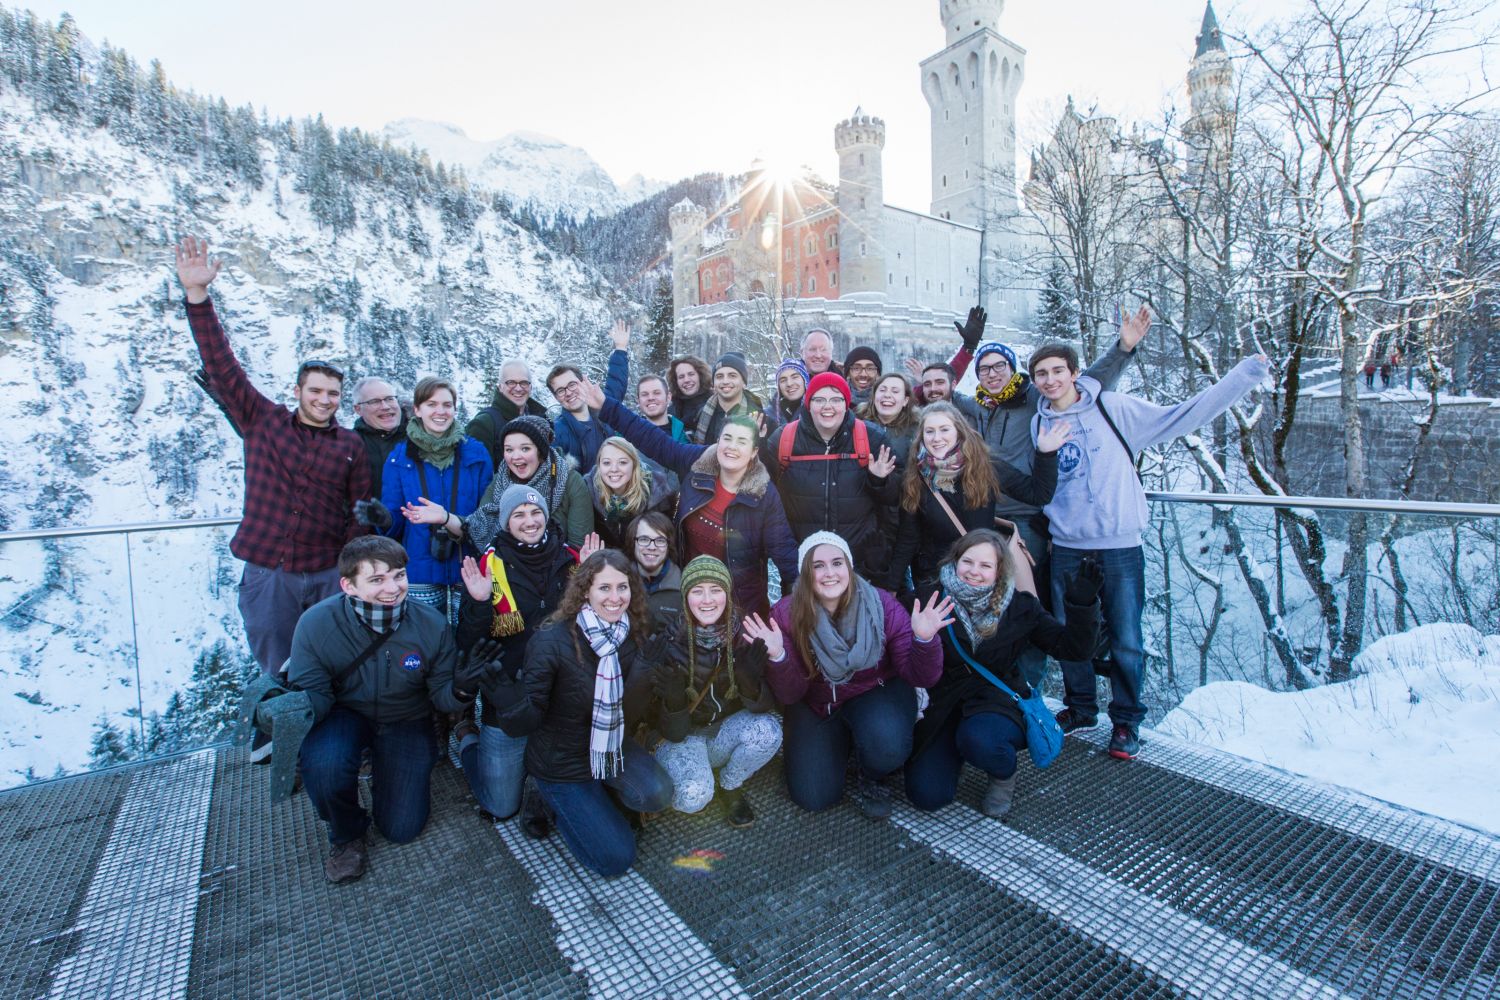 A group photo outside Neuschwanstein Castle in Germany.